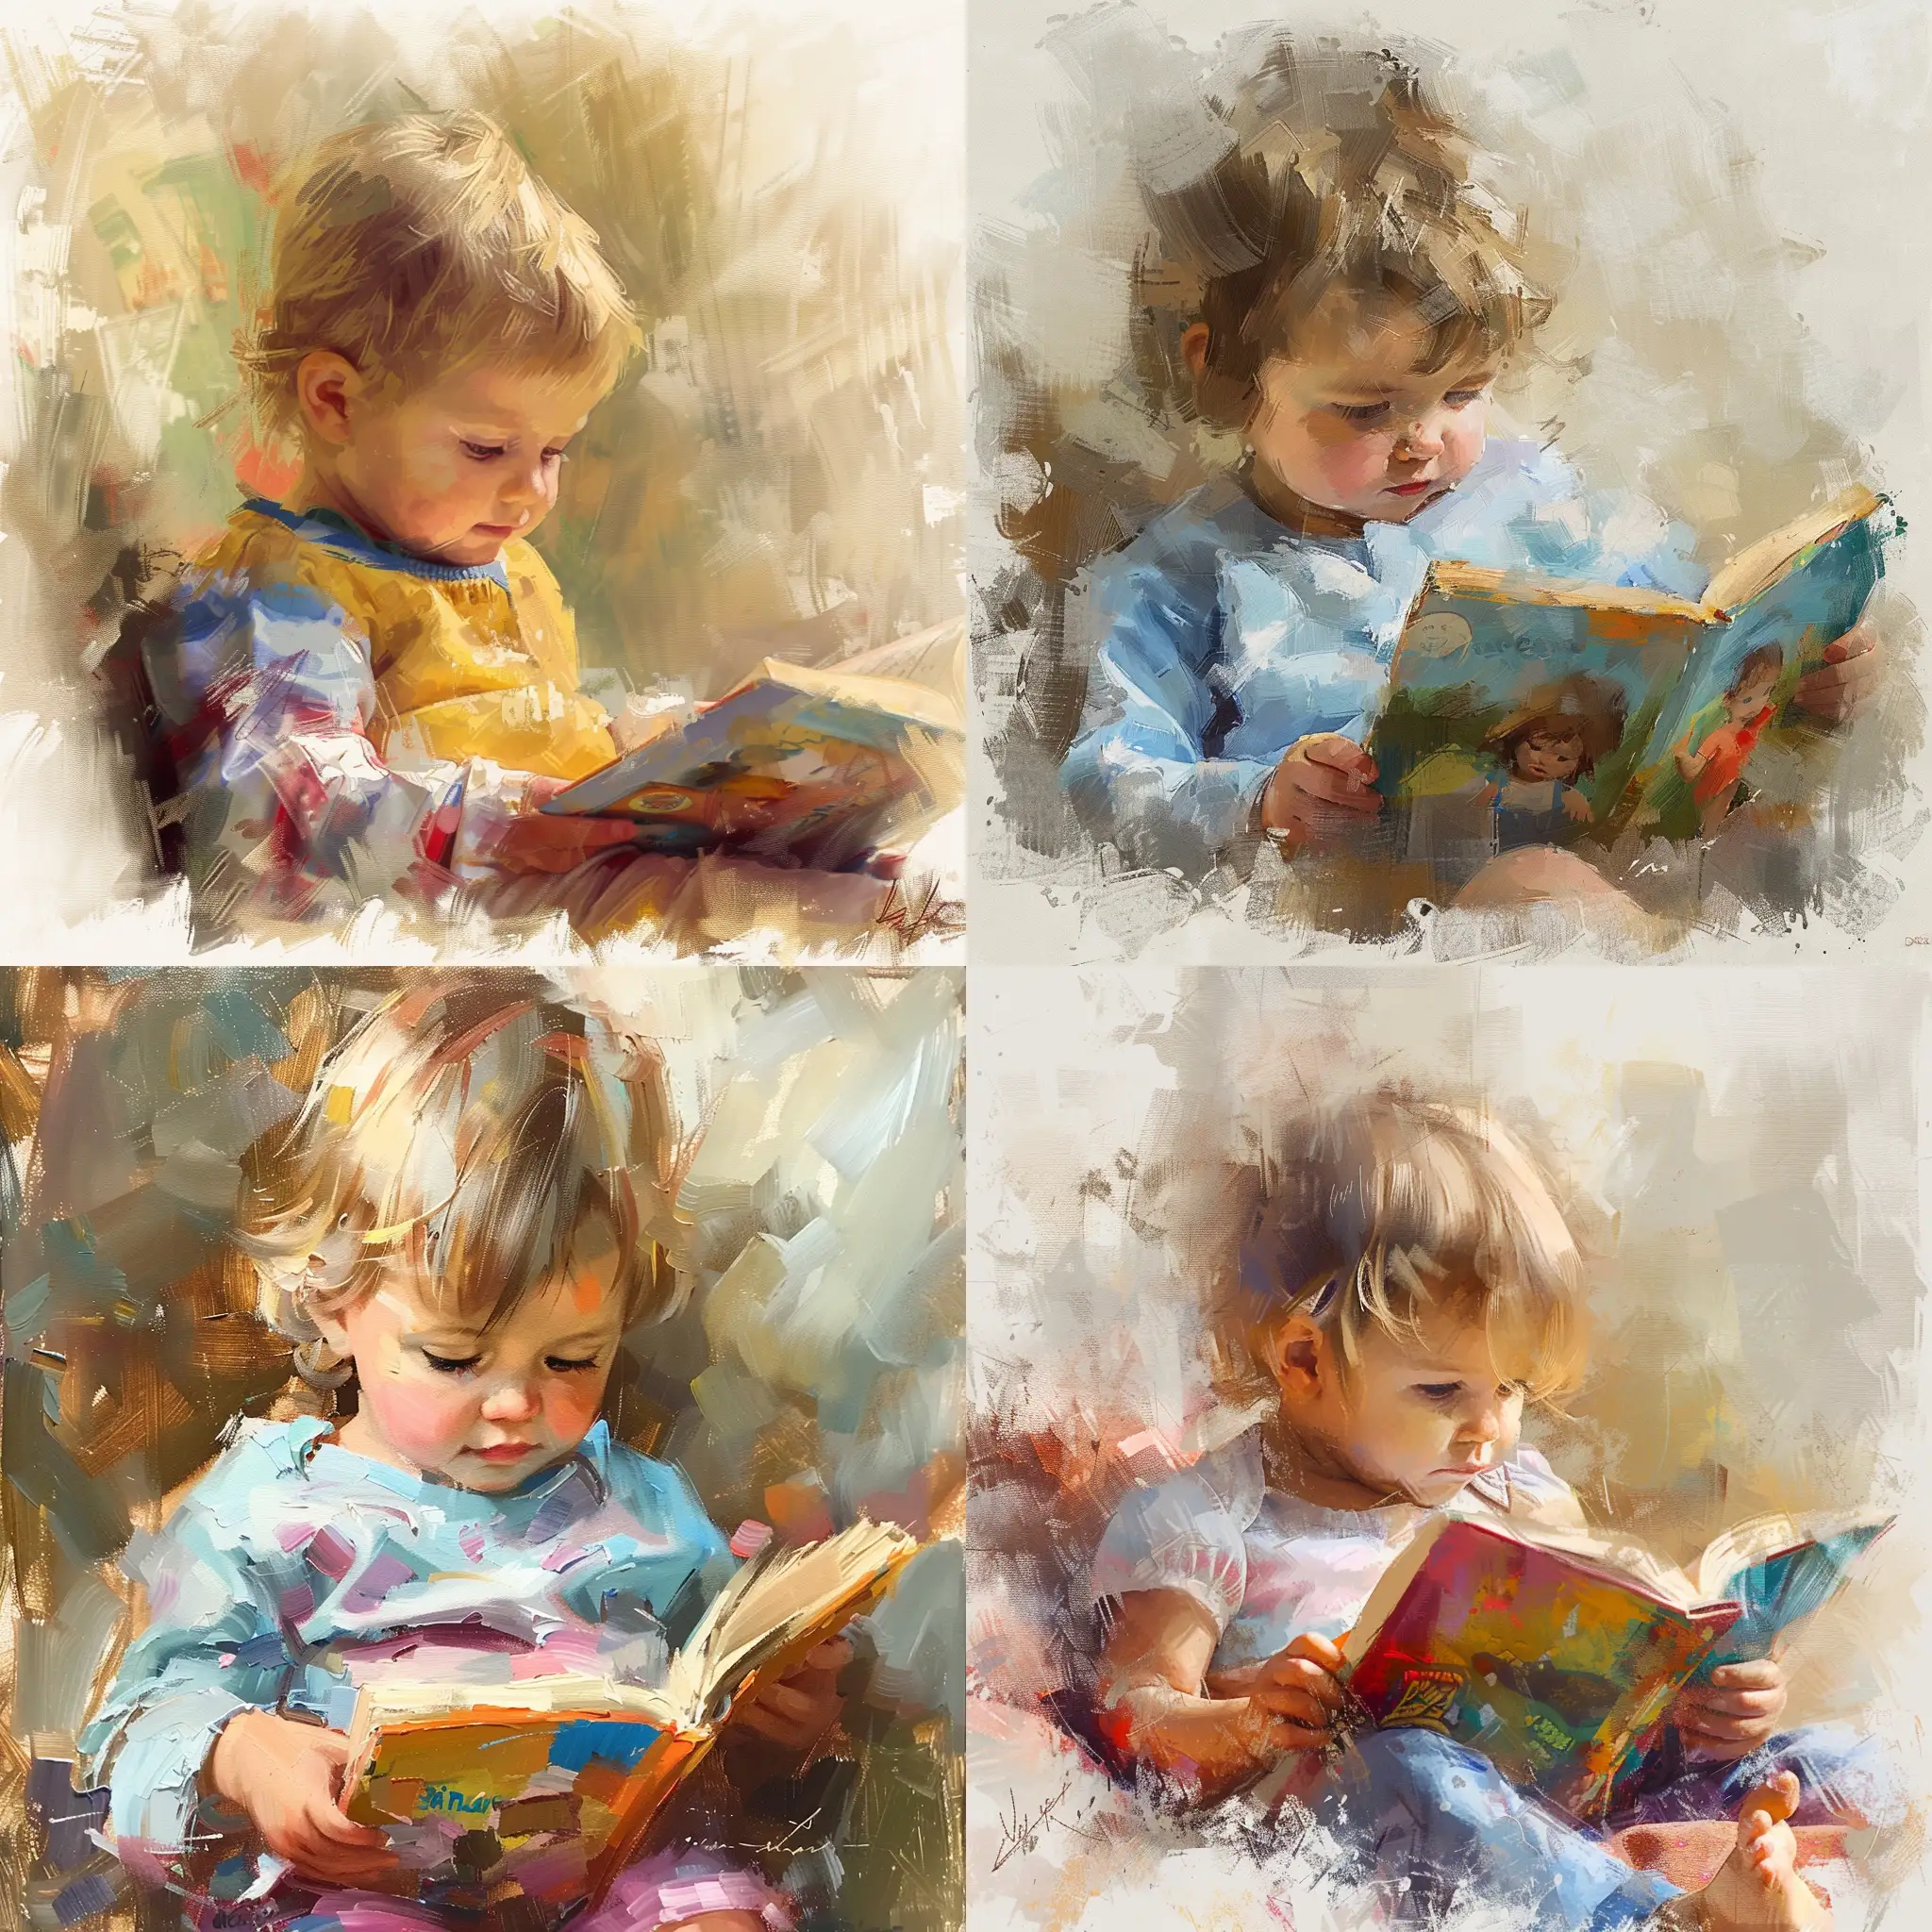 Adorable-Child-Immersed-in-Joyful-Reading-OilStyle-Illustration